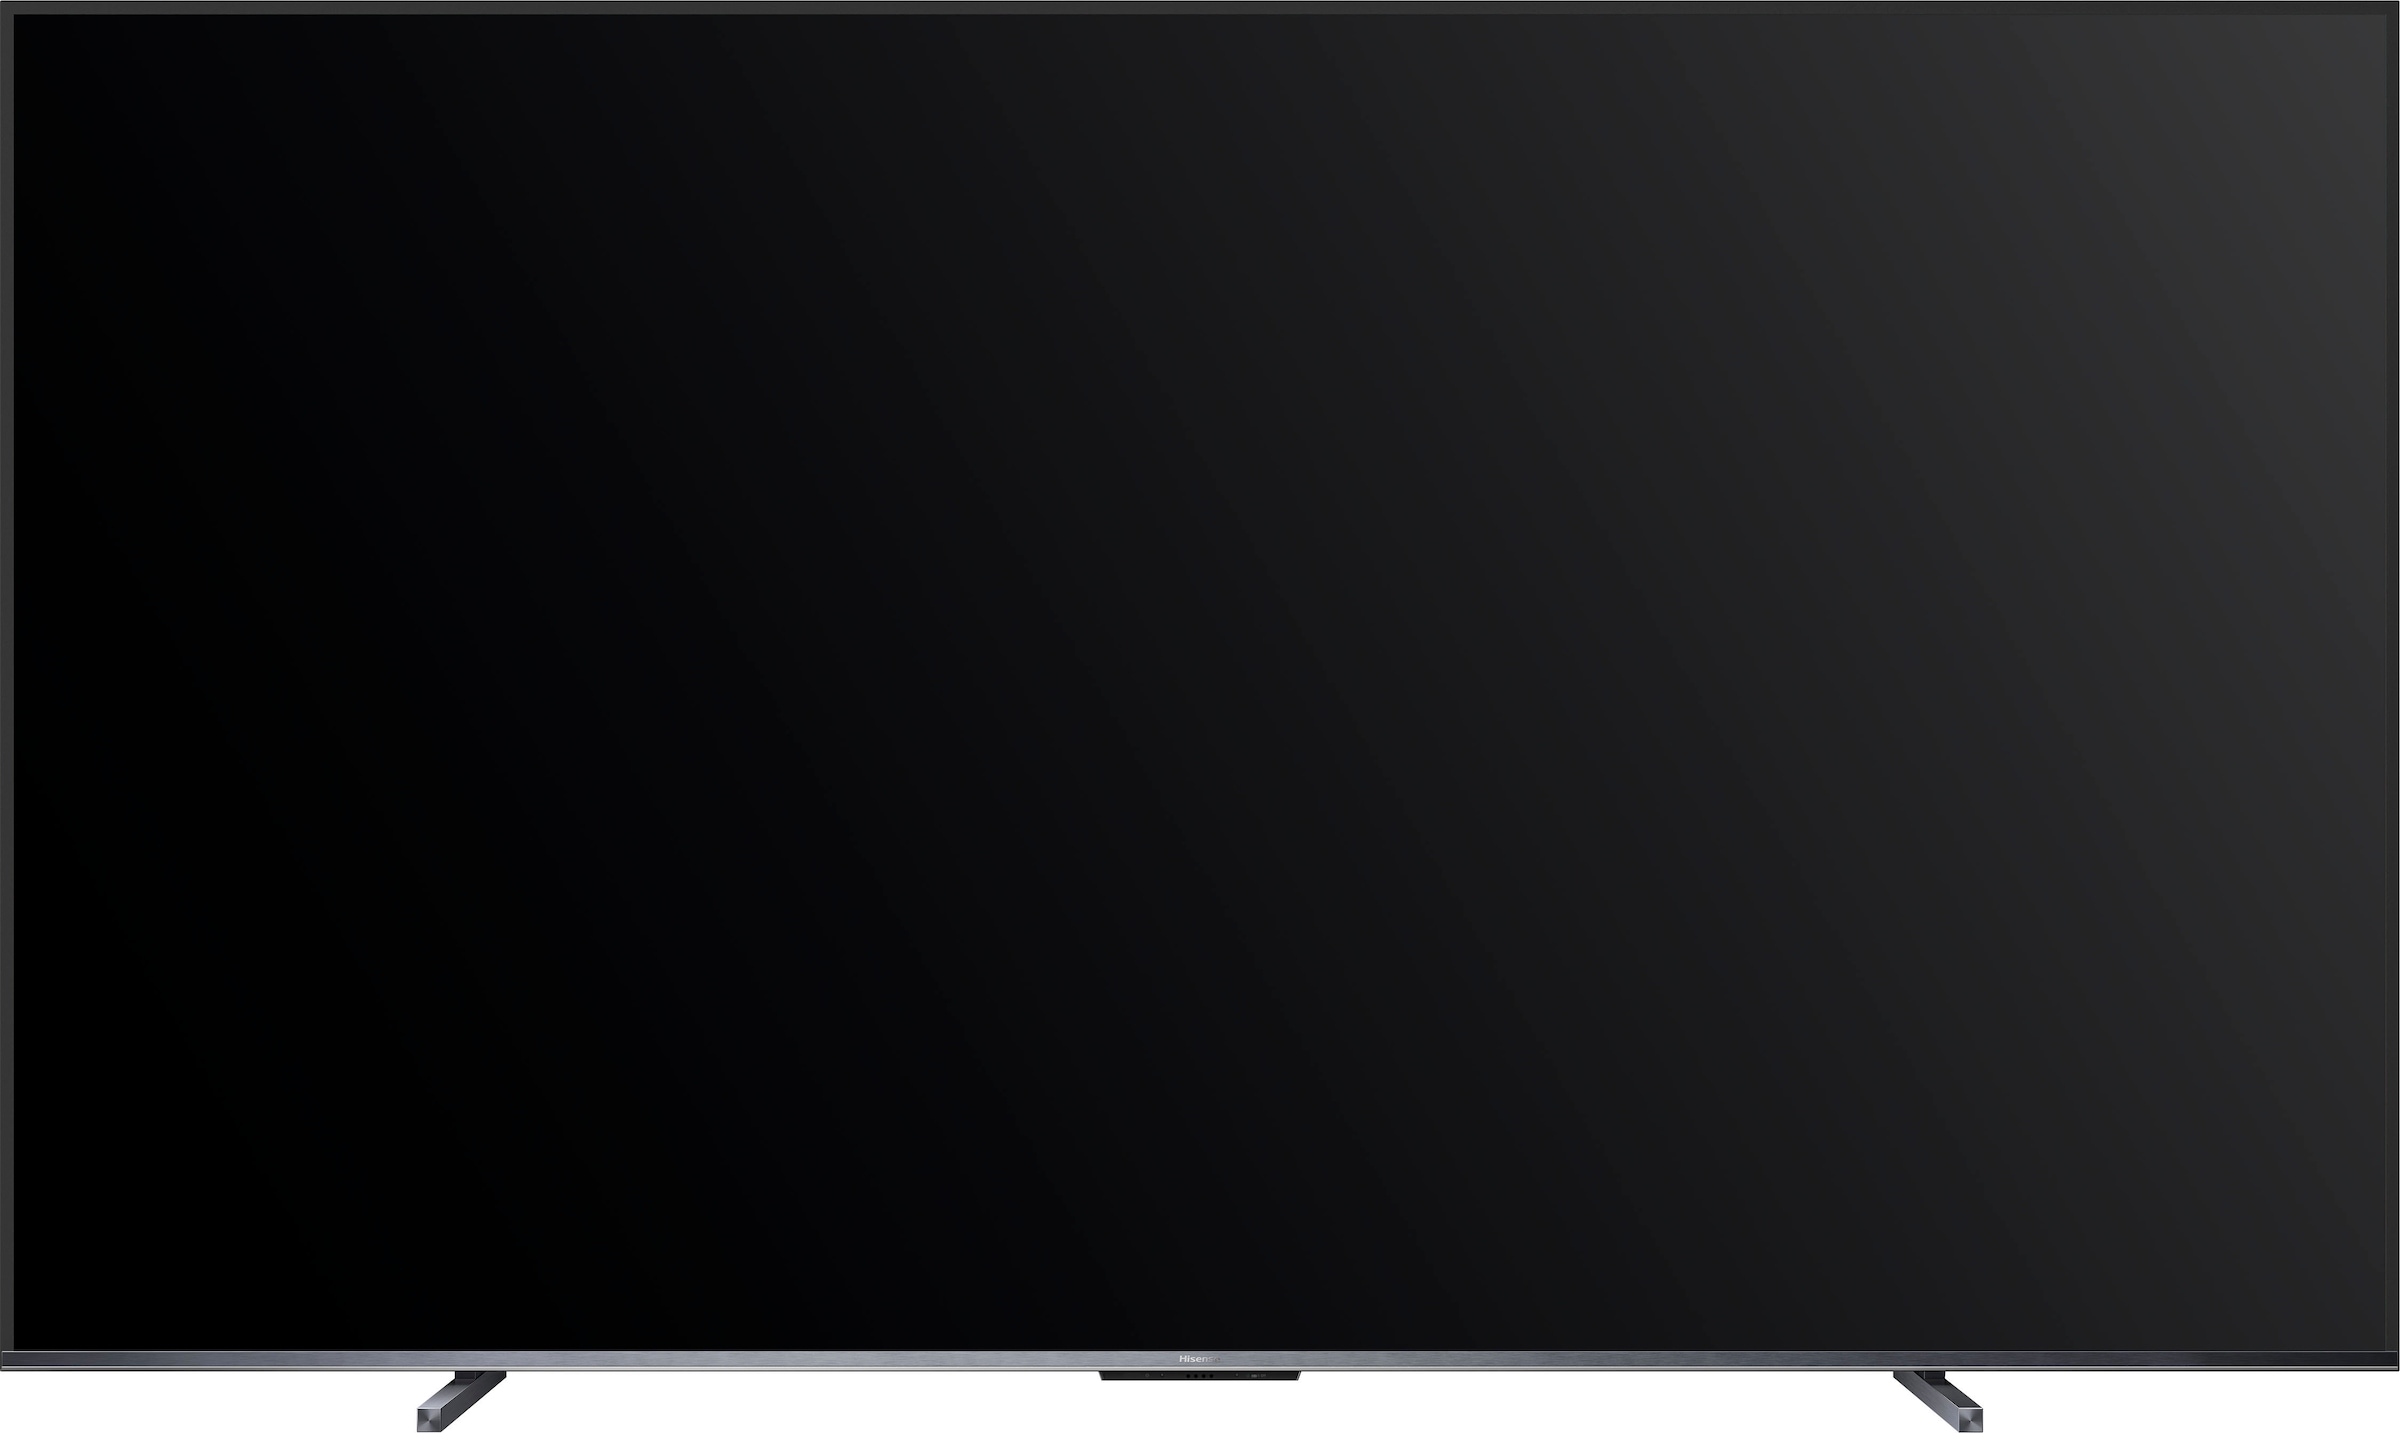 Hisense Mini-LED-Fernseher, 253 cm/100 Zoll, 4K Ultra HD, Smart-TV, 4K UHD